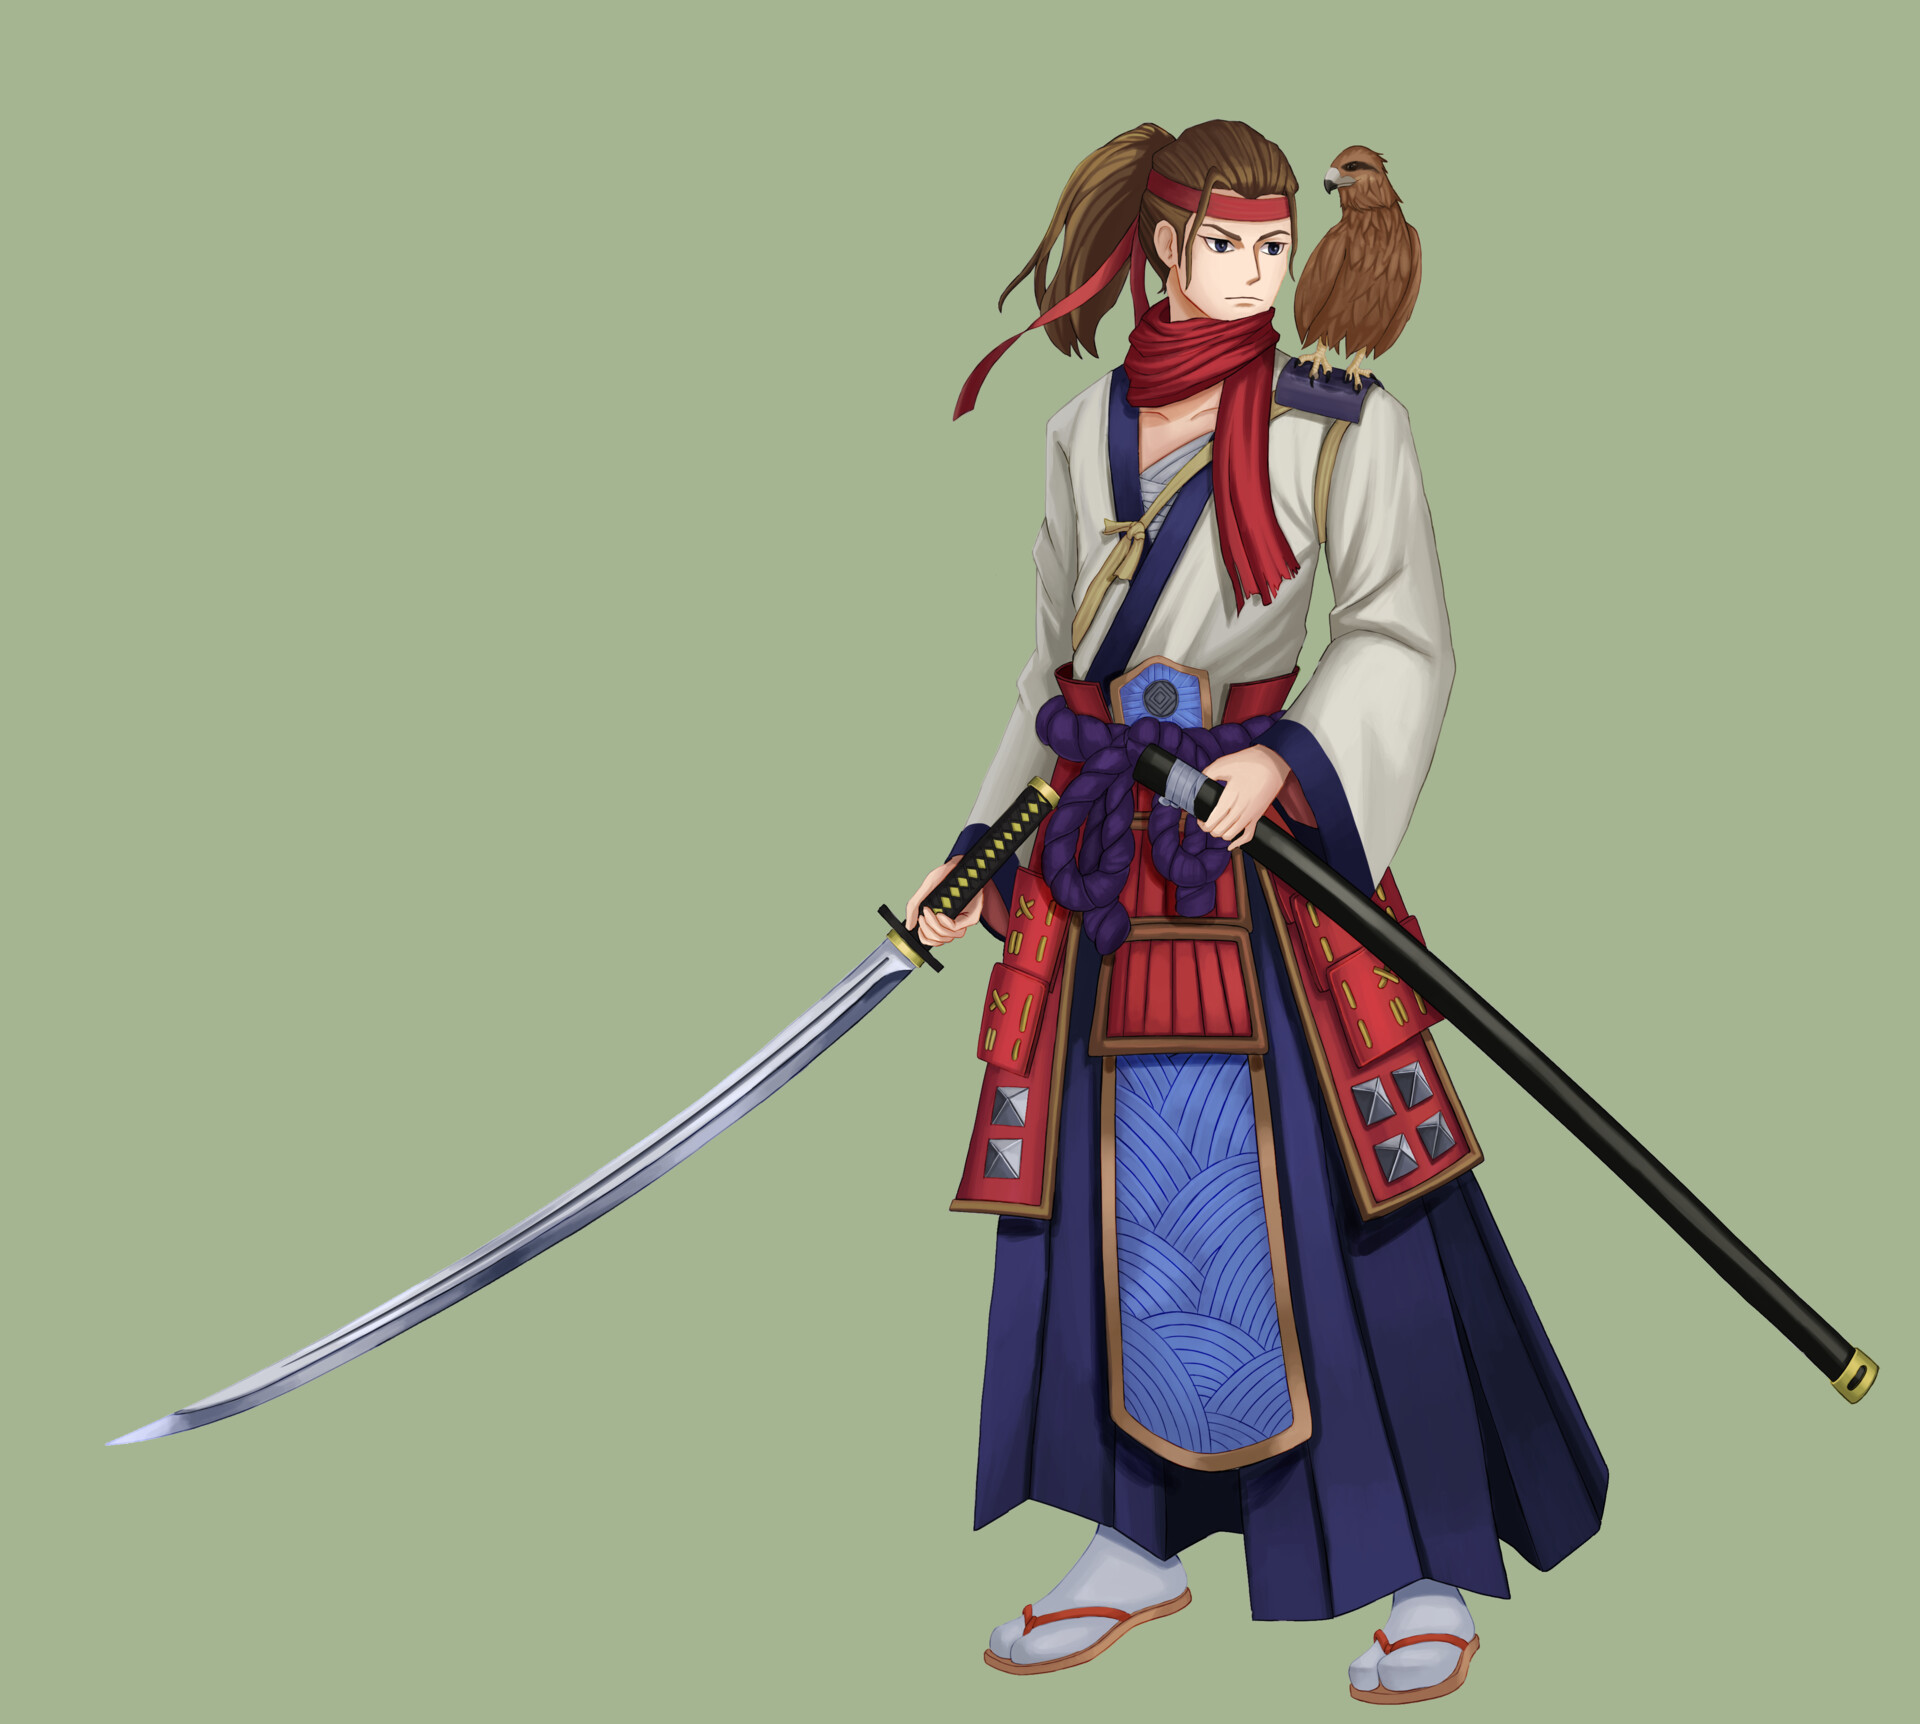 ArtStation - Japanese style sword man